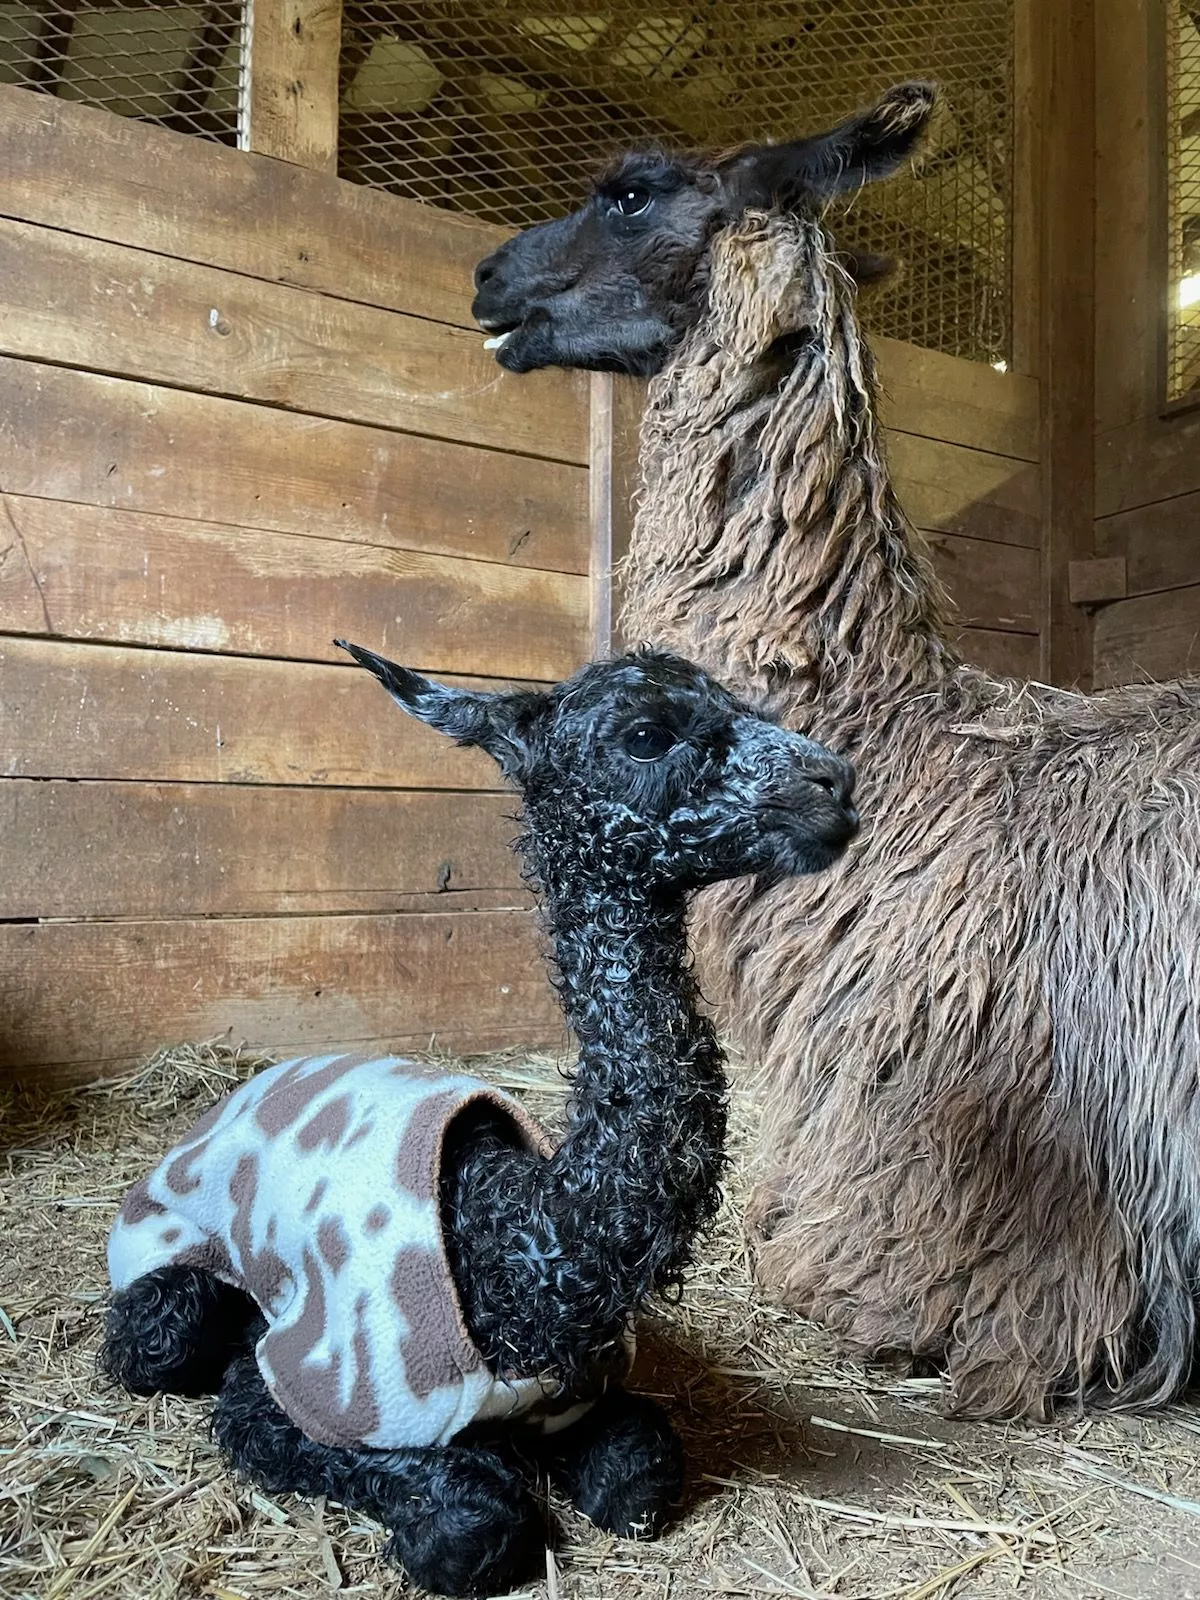 A photo of a llama named Tonks